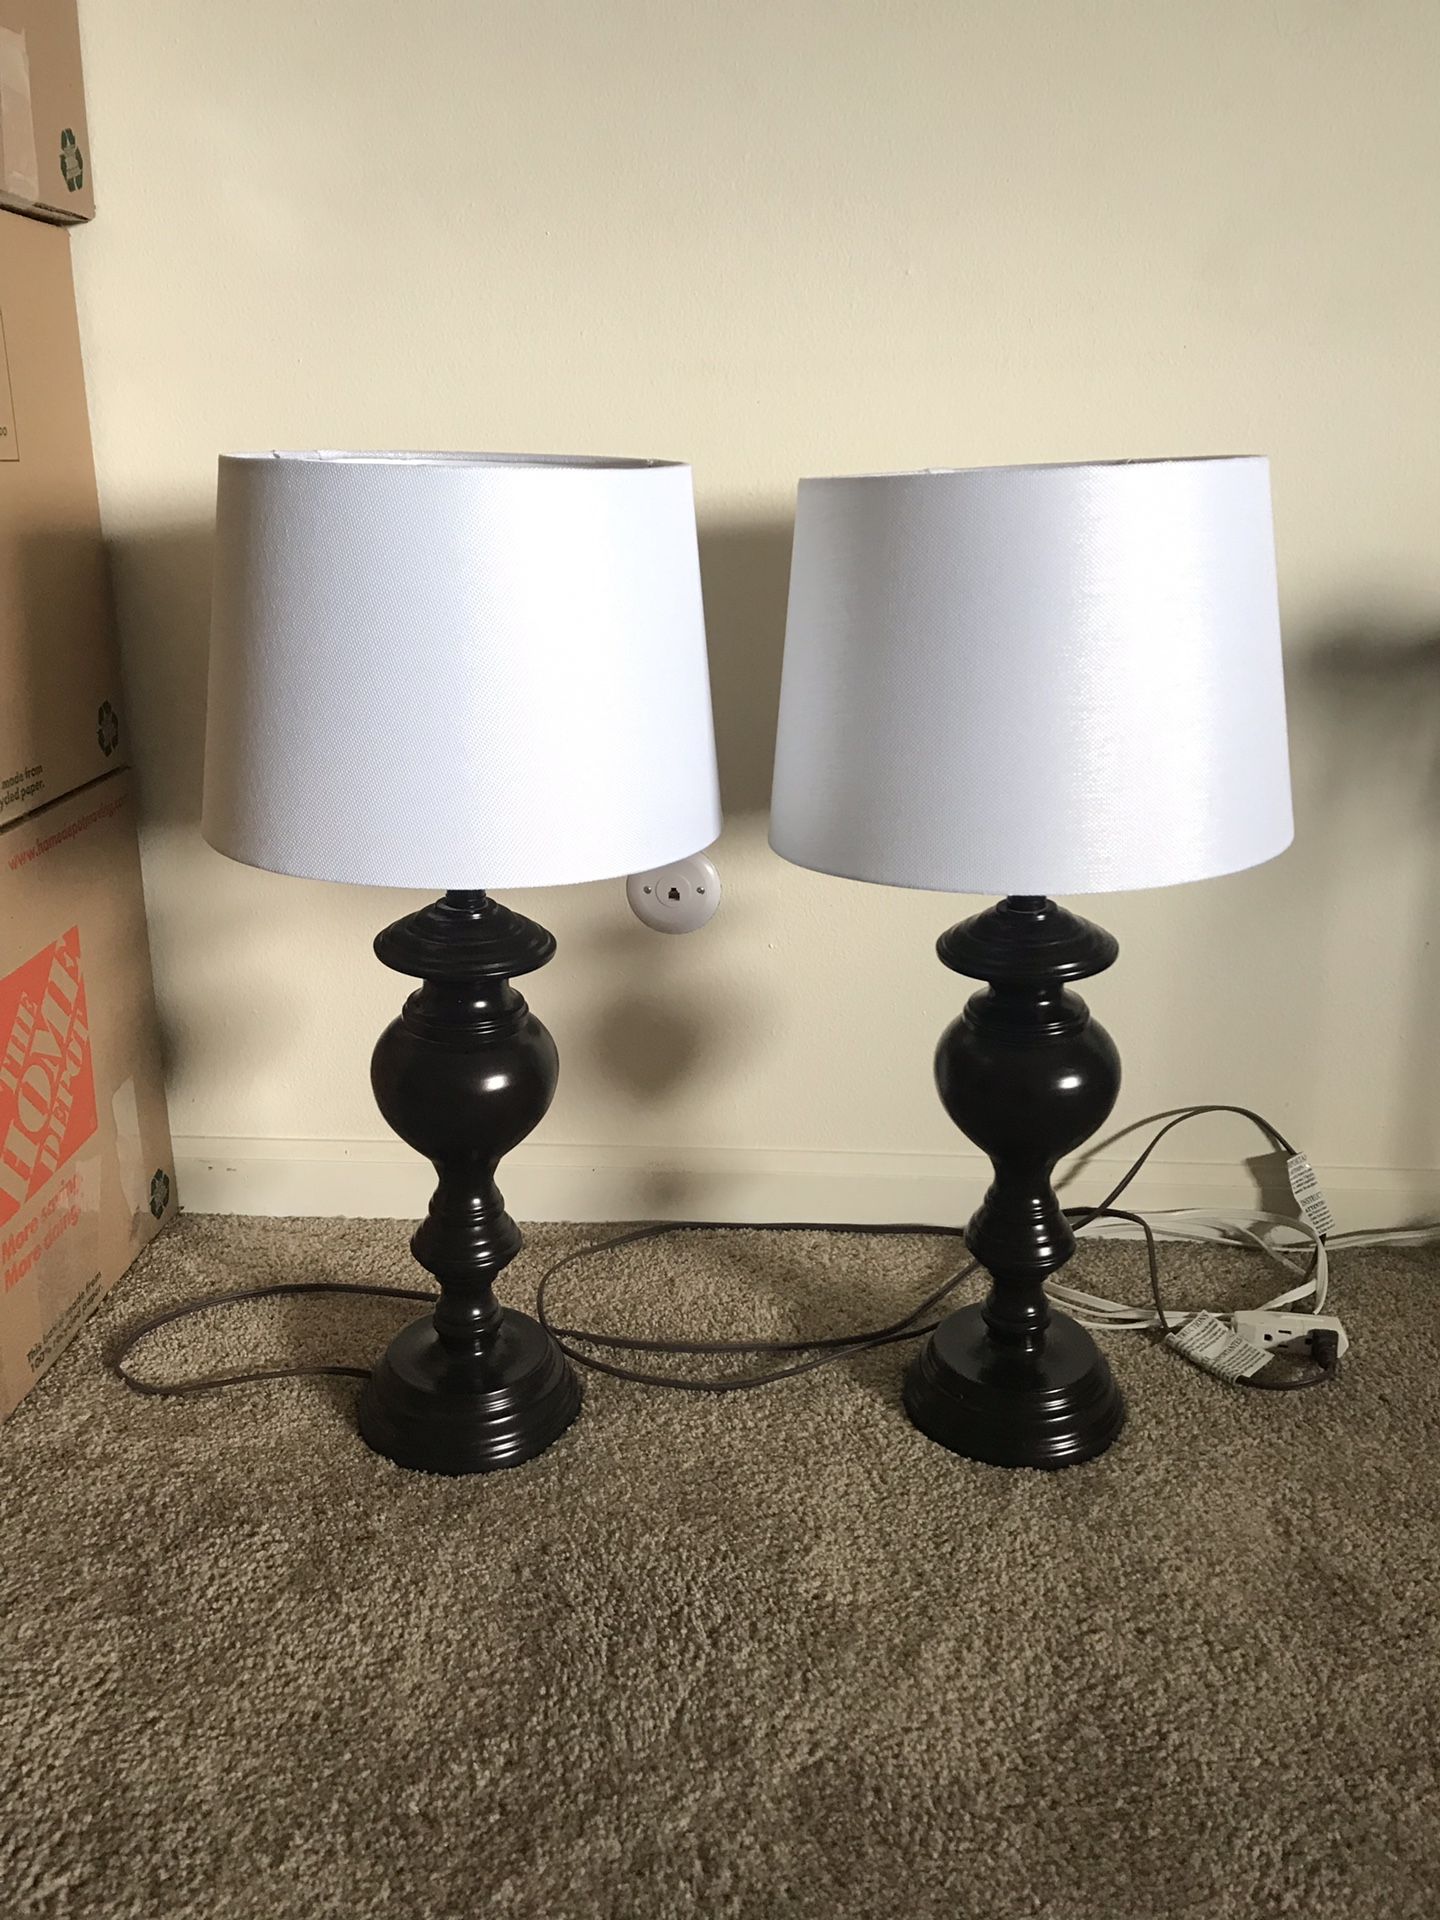 Lamp set (very dark brown and white shades)